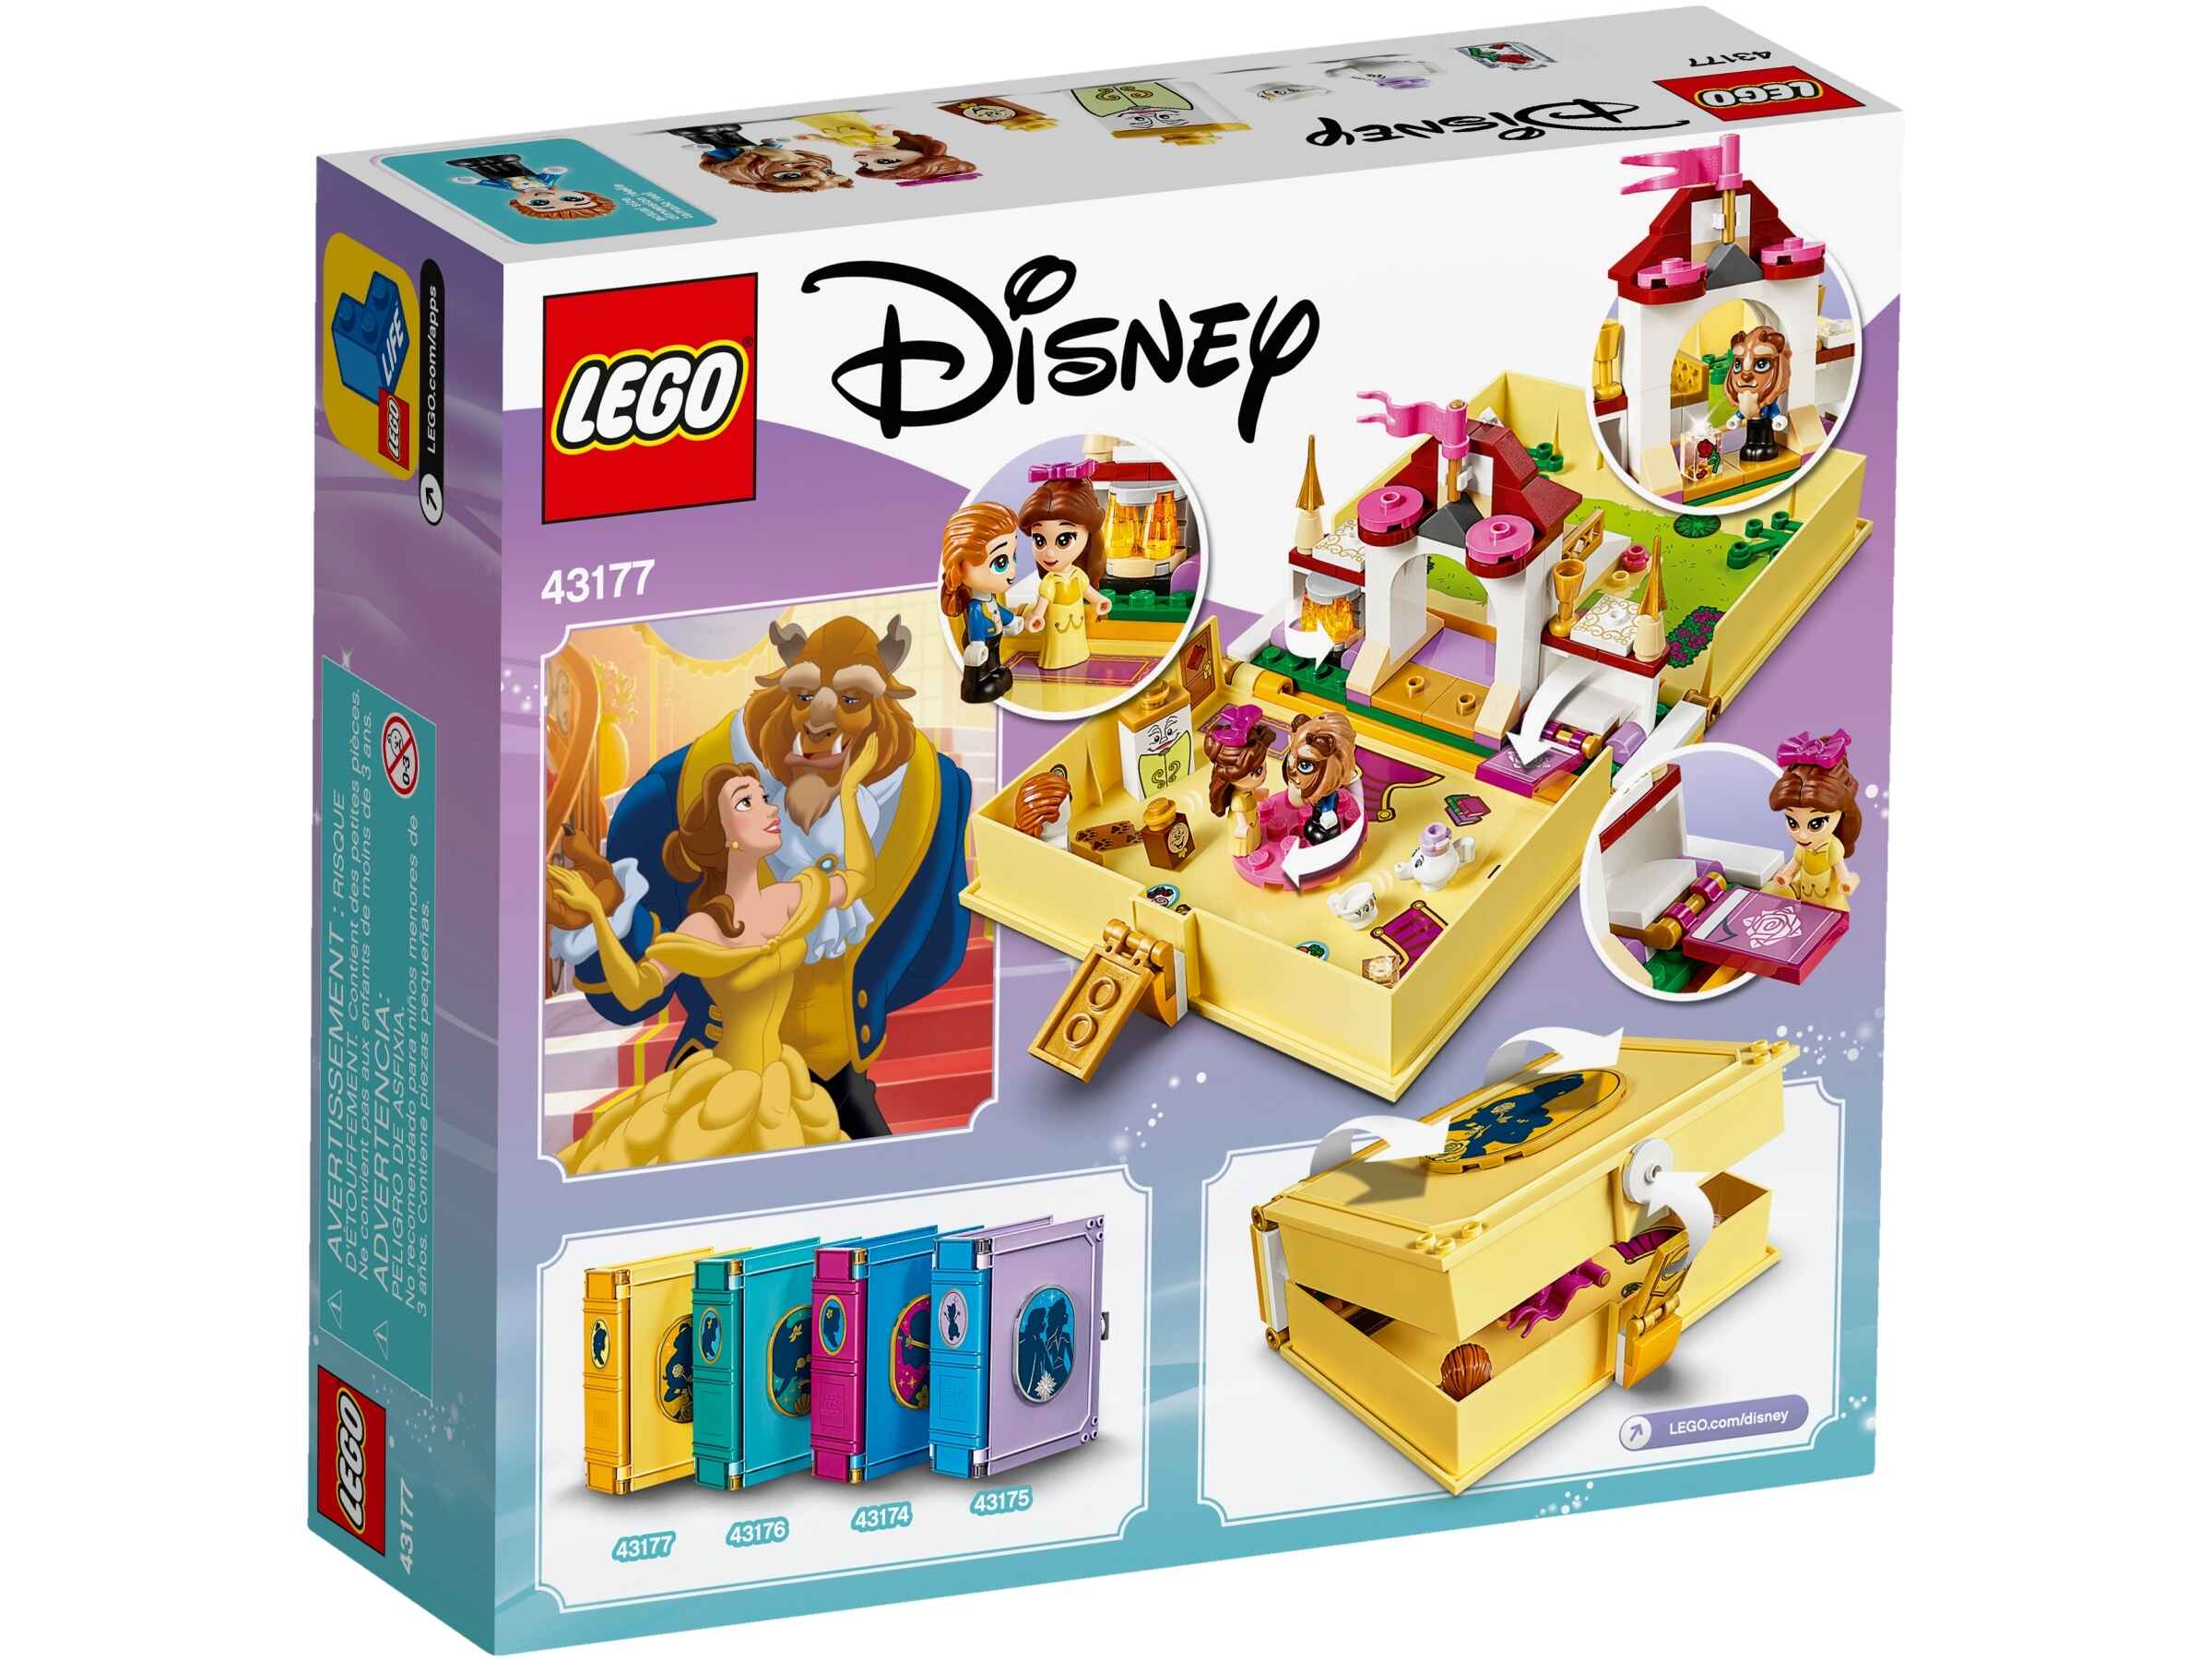 Spielzeug Lobigo.de: LEGO Disney Princess Belles Spielset: Abenteuer-Set, tragbares 43177 Märchenbuch